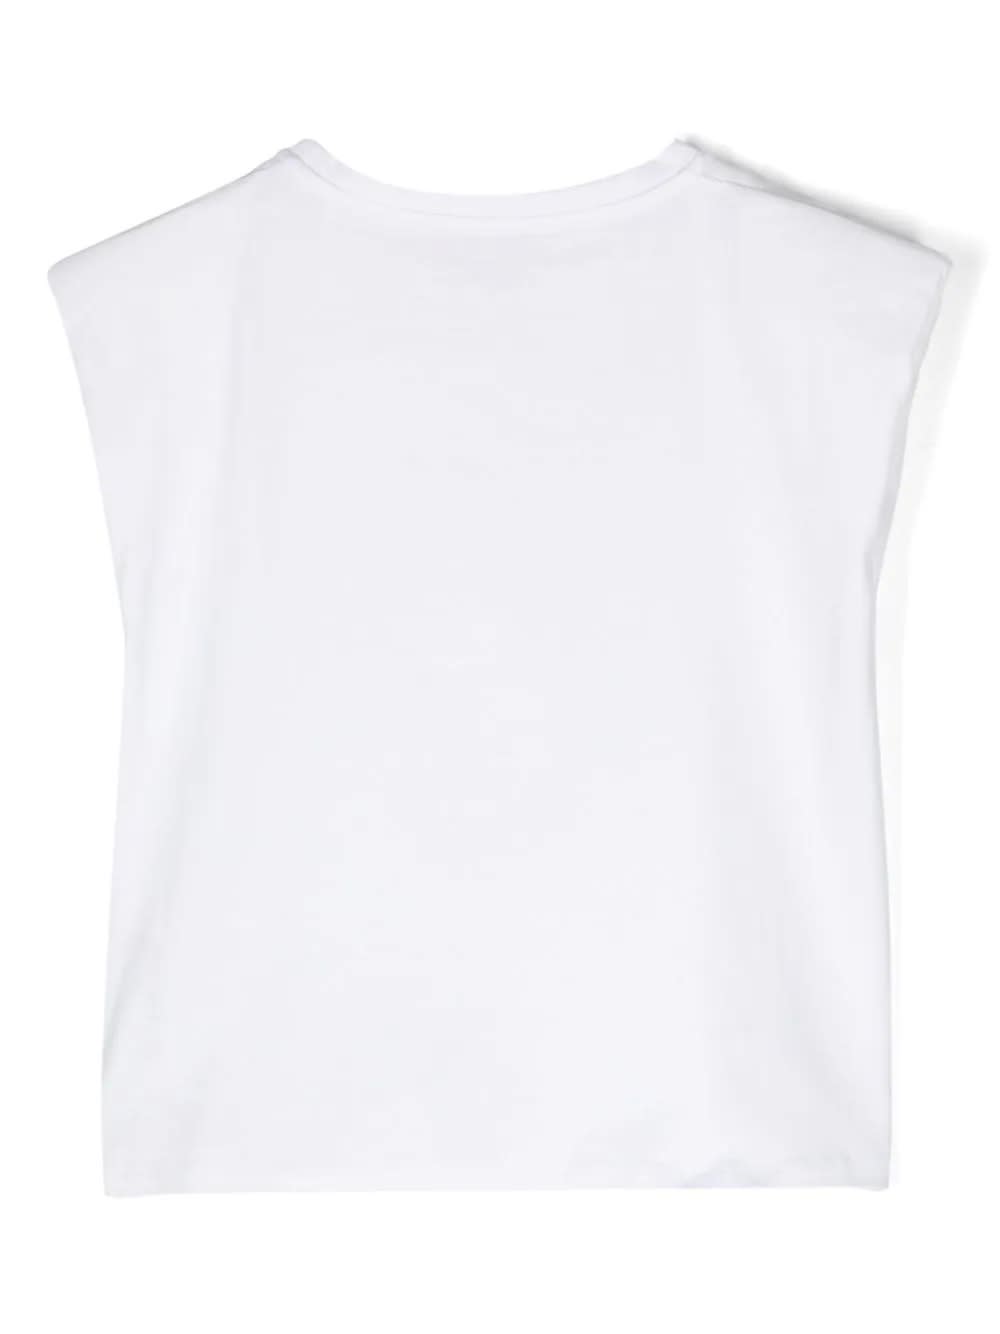 Shop Miss Blumarine White T-shirt With Multicolor Rhinestone Logo